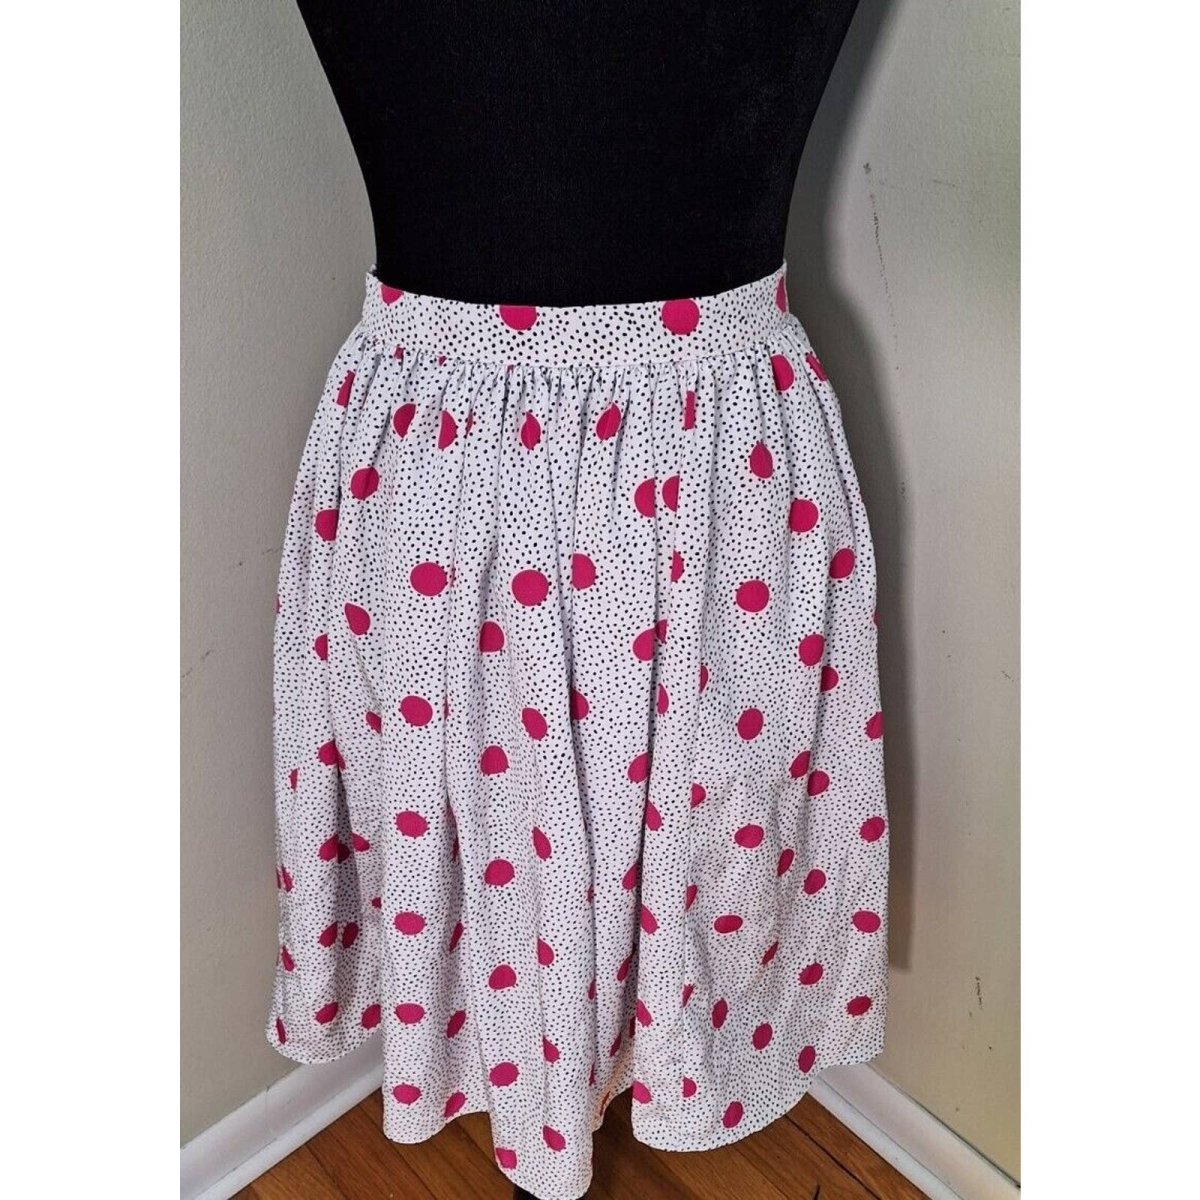 Vintage 80s Pink Polka Dot Skirt Size XS Waist 25" - themallvintage The Mall Vintage